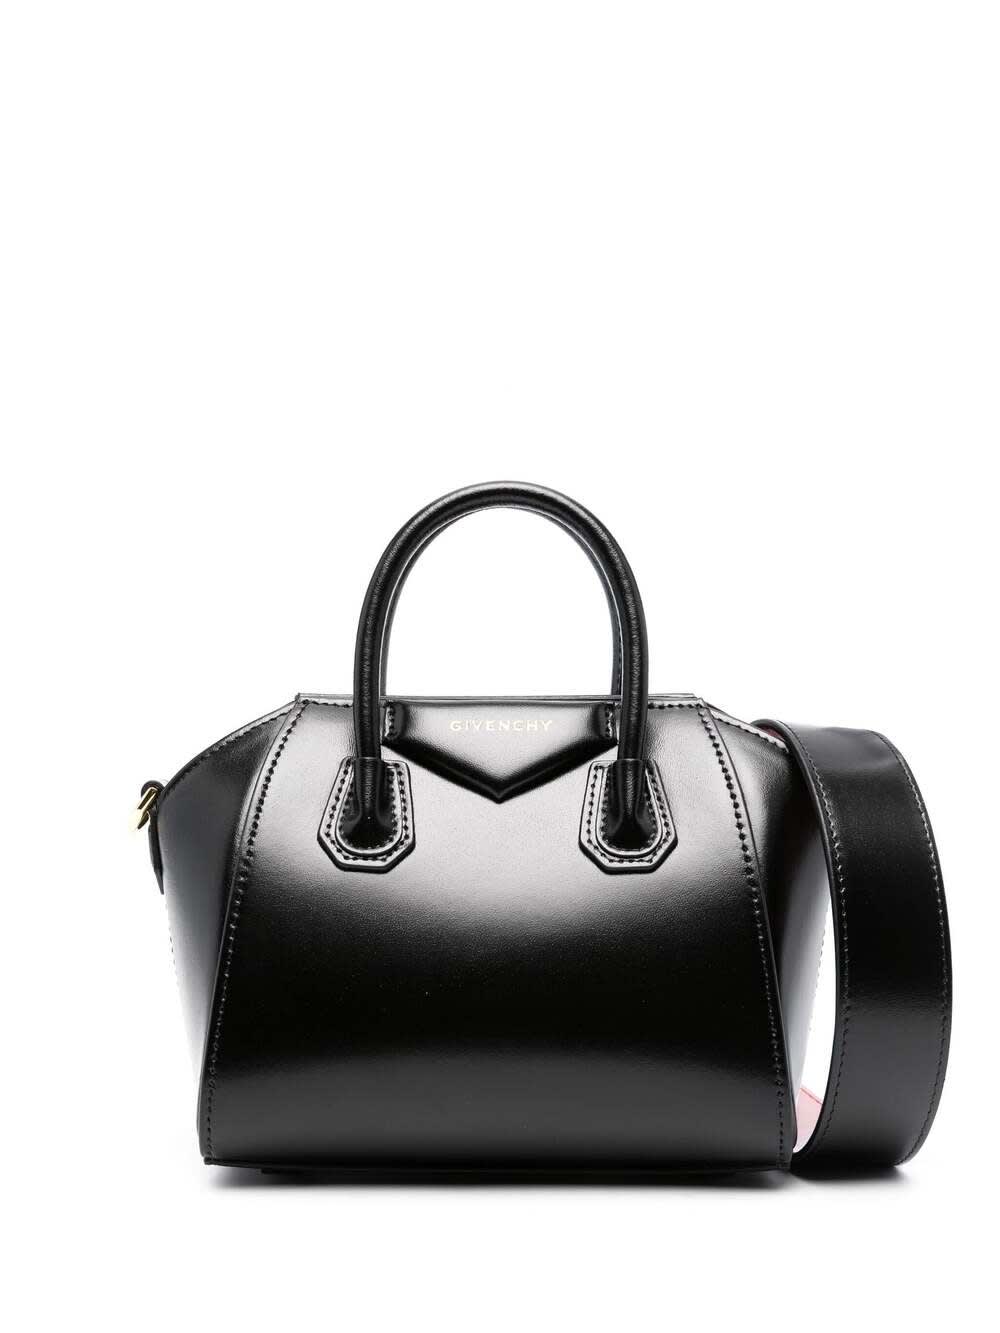 Givenchy Black Antigona Toy Bag In Box Leather